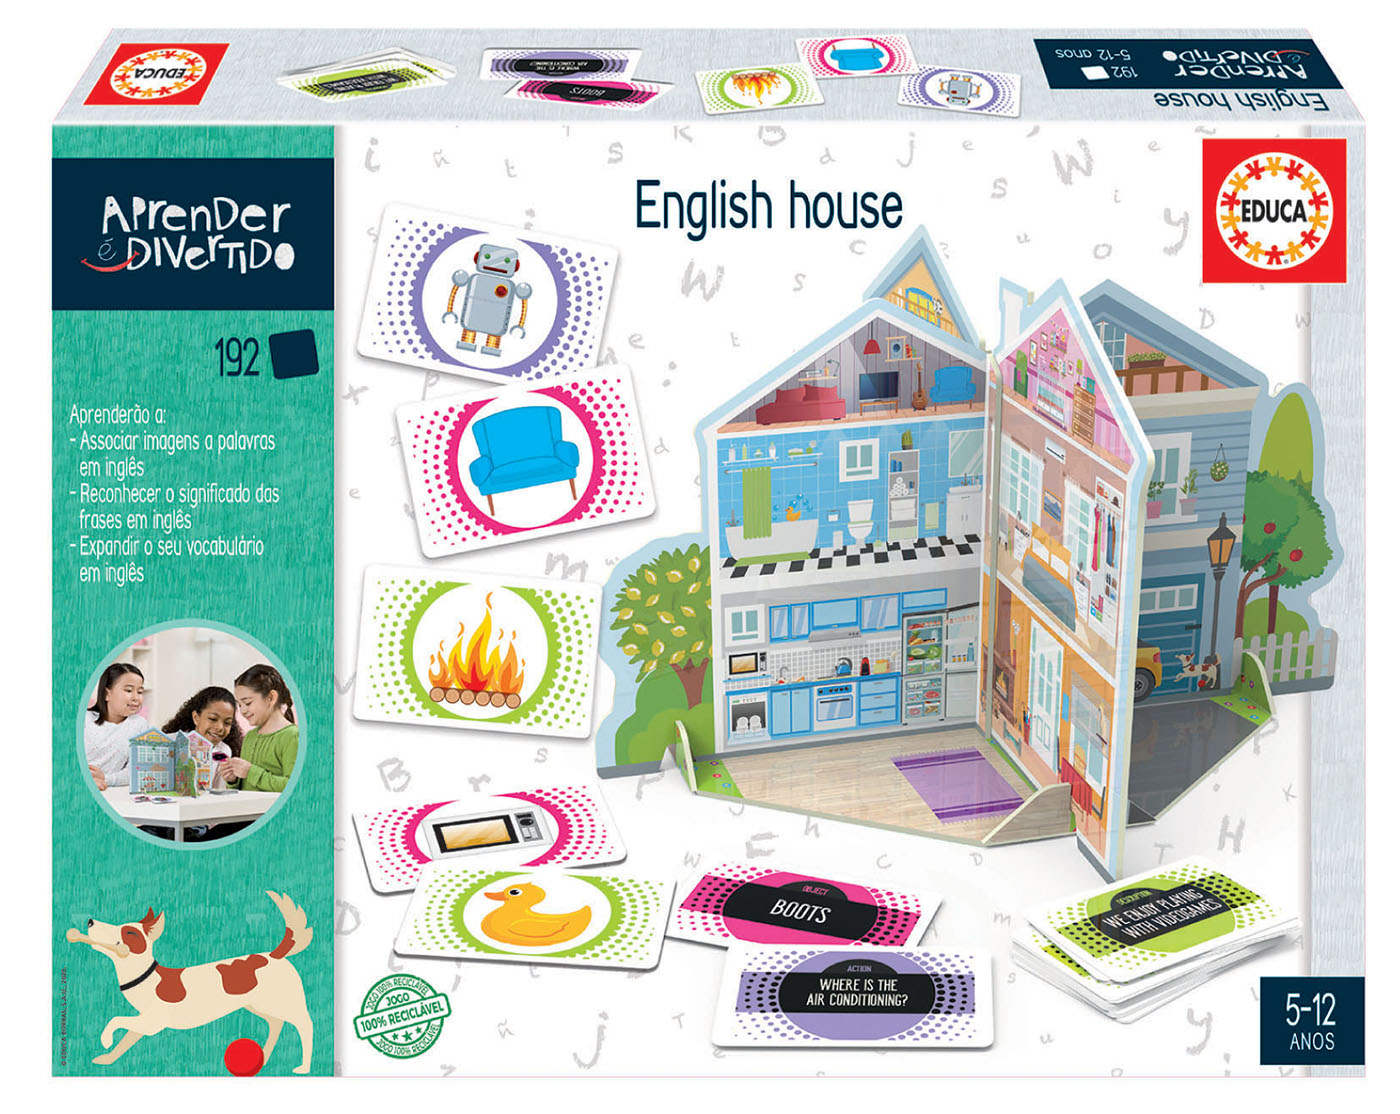 Jogos educativos para aprender inglês, seja infantil ou adulto